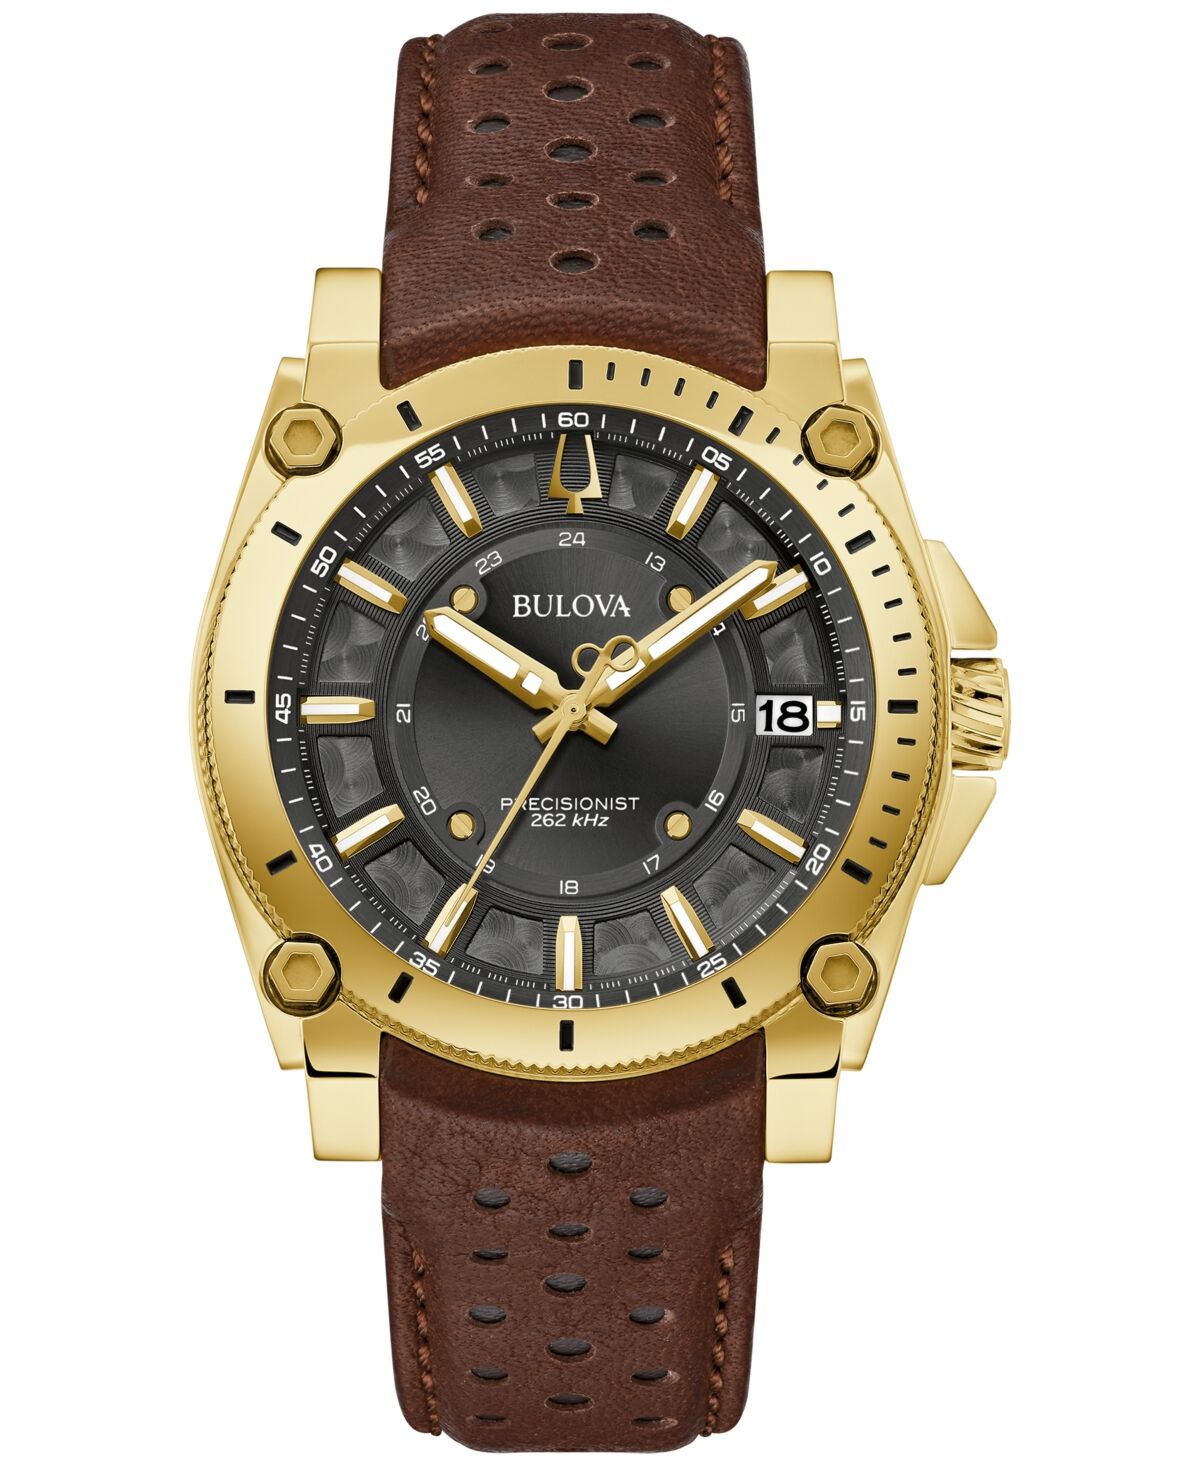 Bulova Men's Precisionist Icon Brown Leather Strap Watch 40mm - Brown